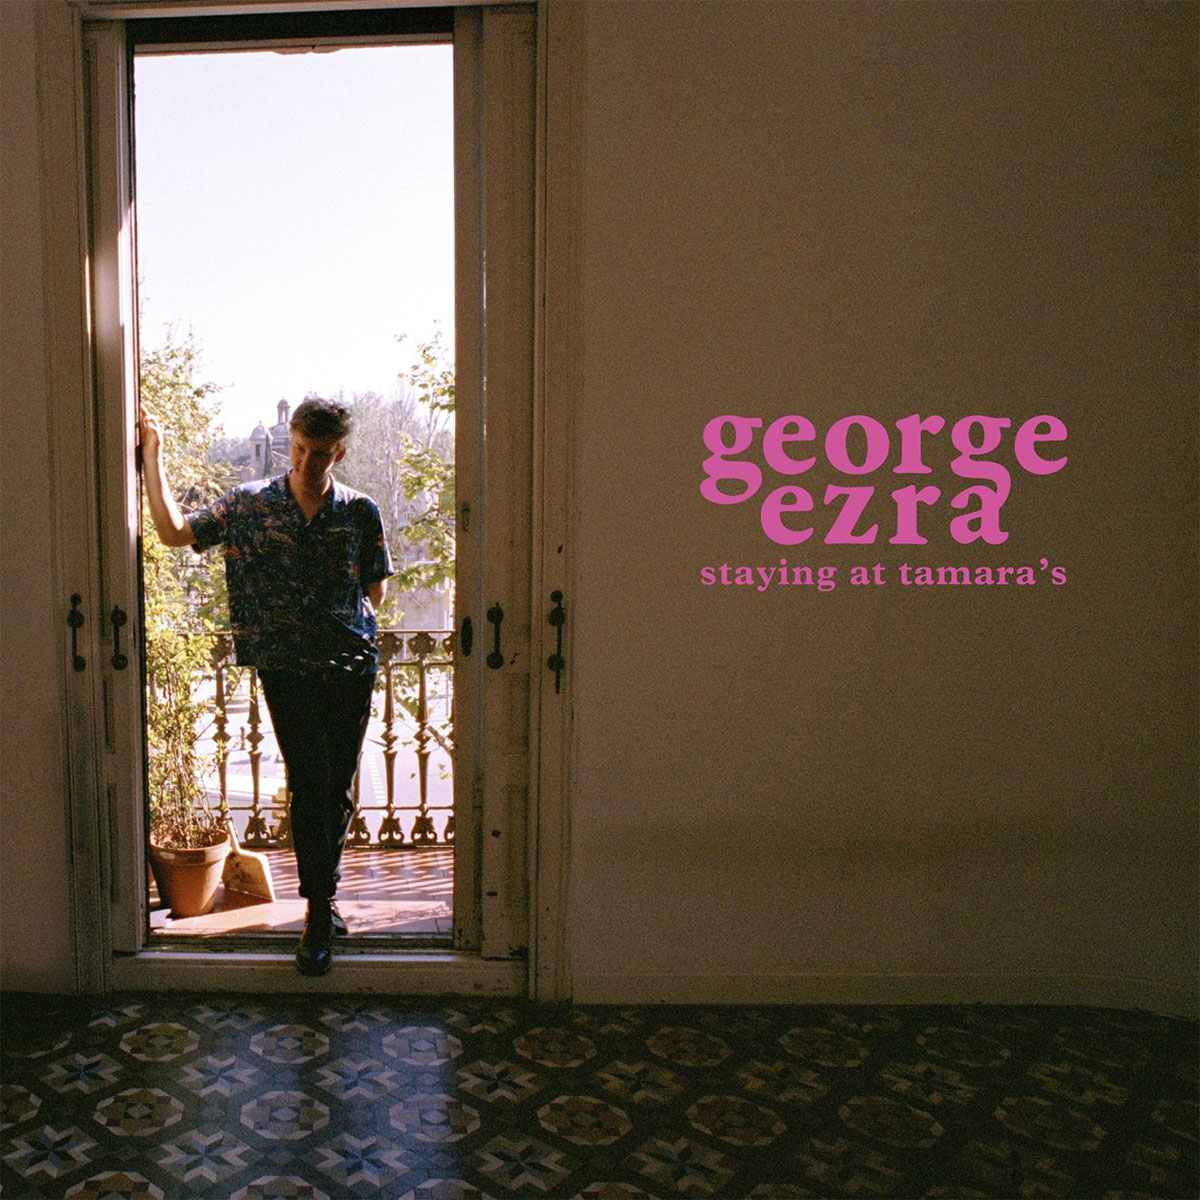 33George Ezra Albumcover SonyMusic (003)